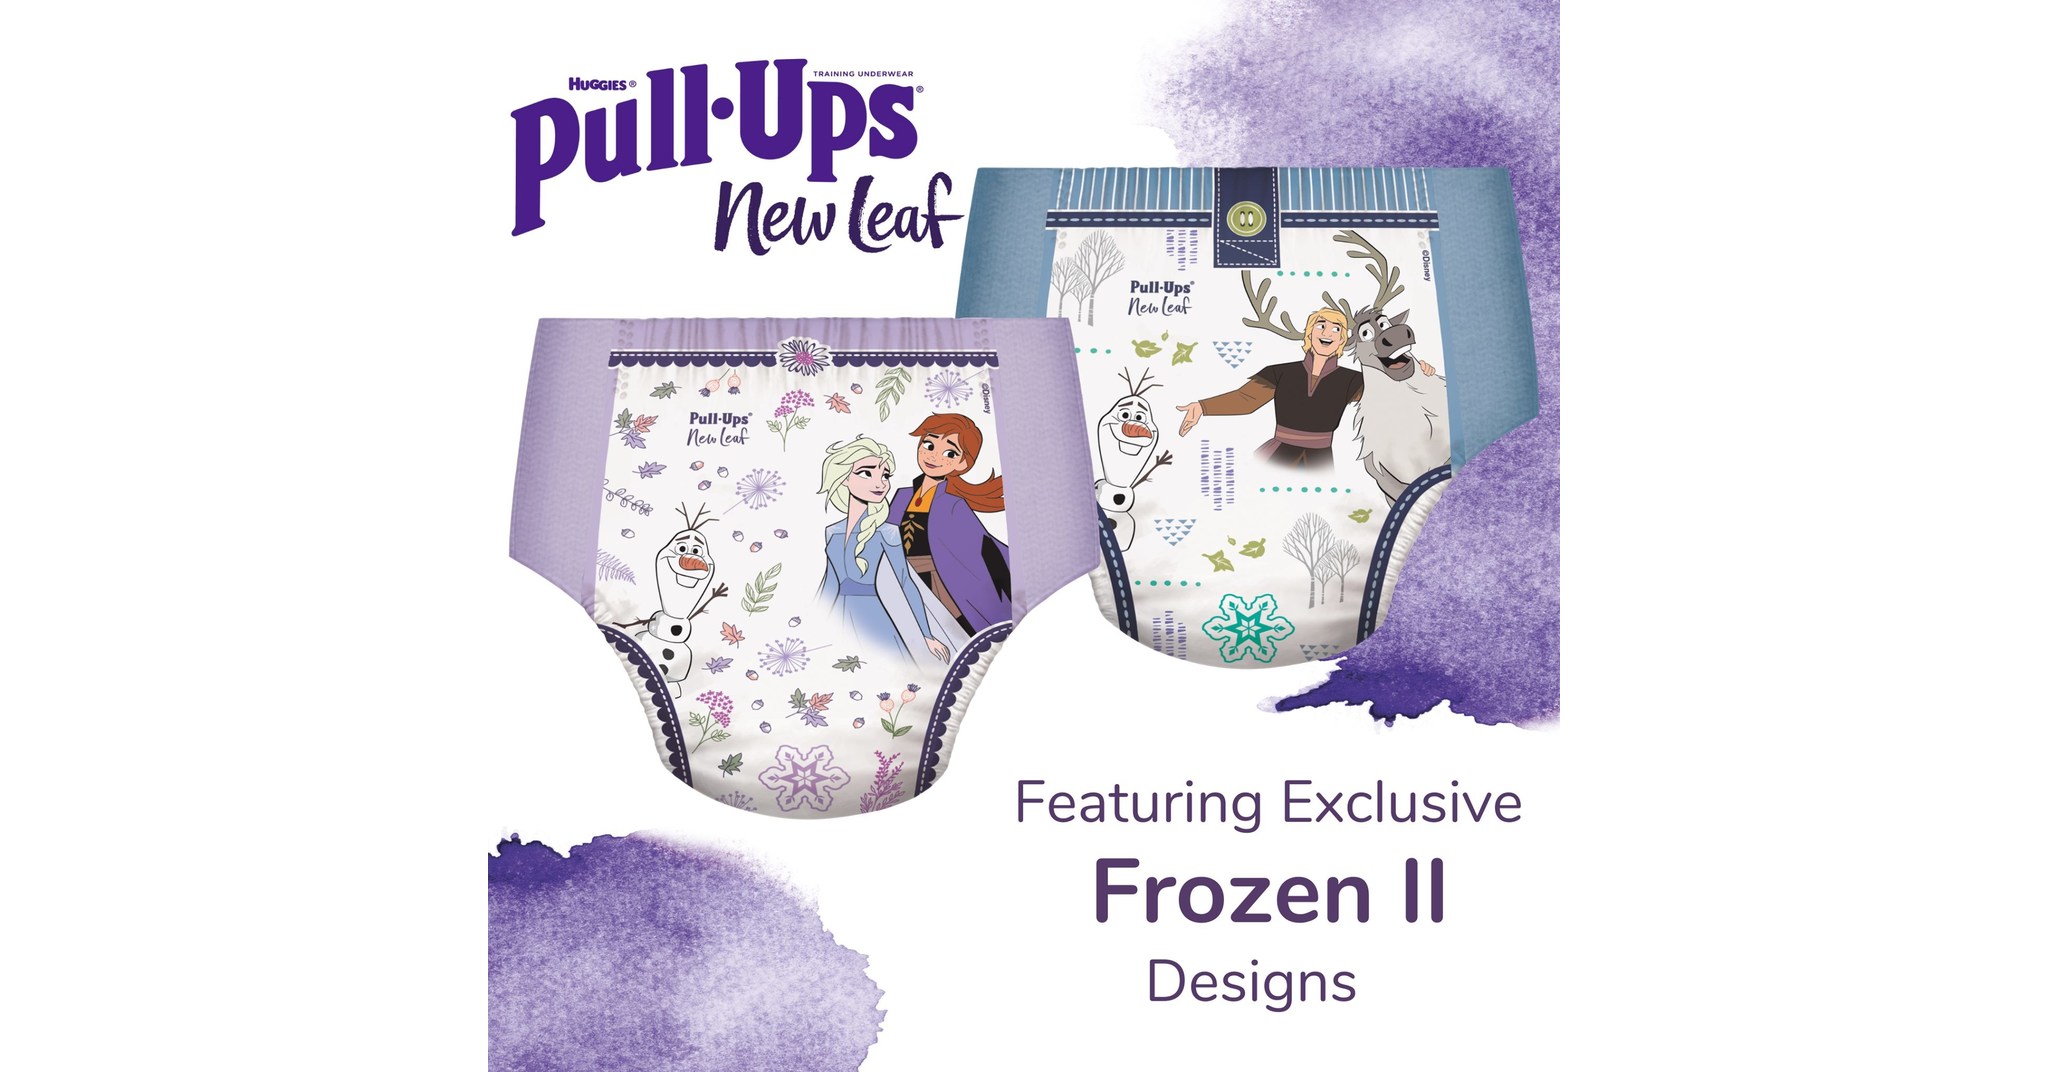 Pull-Ups Releases New Leaf Training Underwear - Earnshaws Magazine